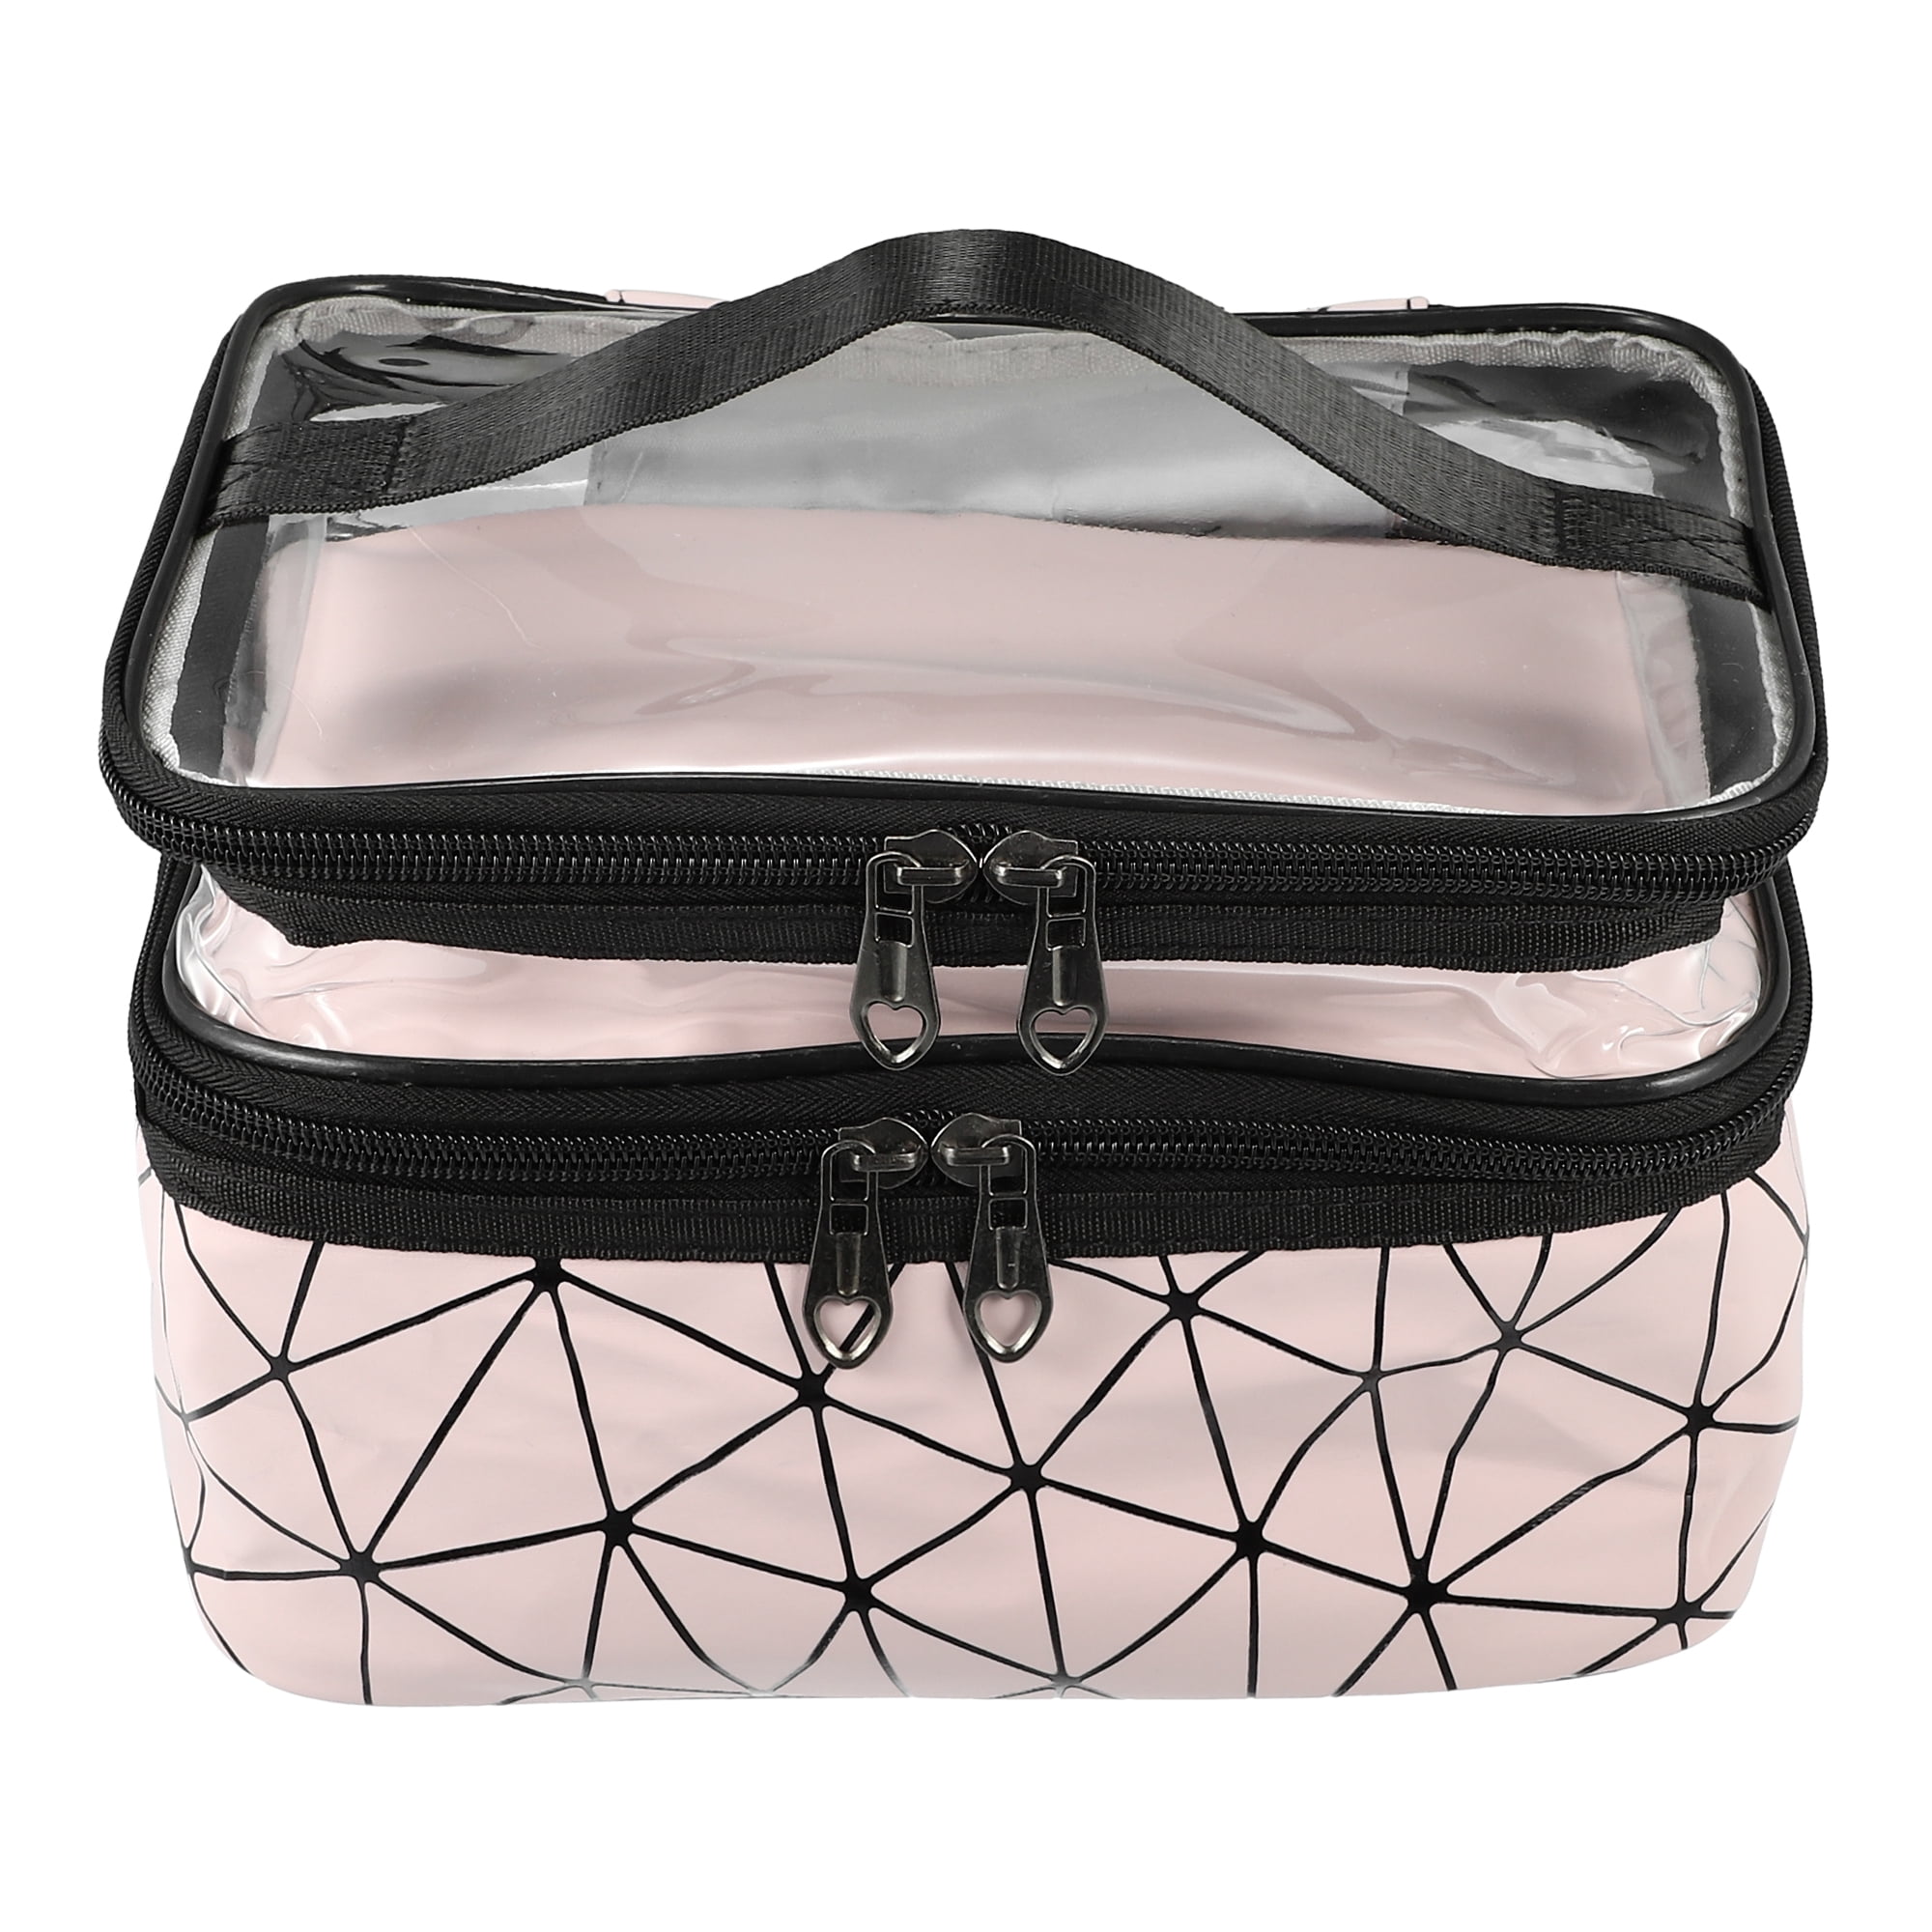 Unique Bargains Double Layer Makeup Bag Cosmetic Travel Bag Case Organizer  Bag Clear Bags for Women 1 Pcs Pink